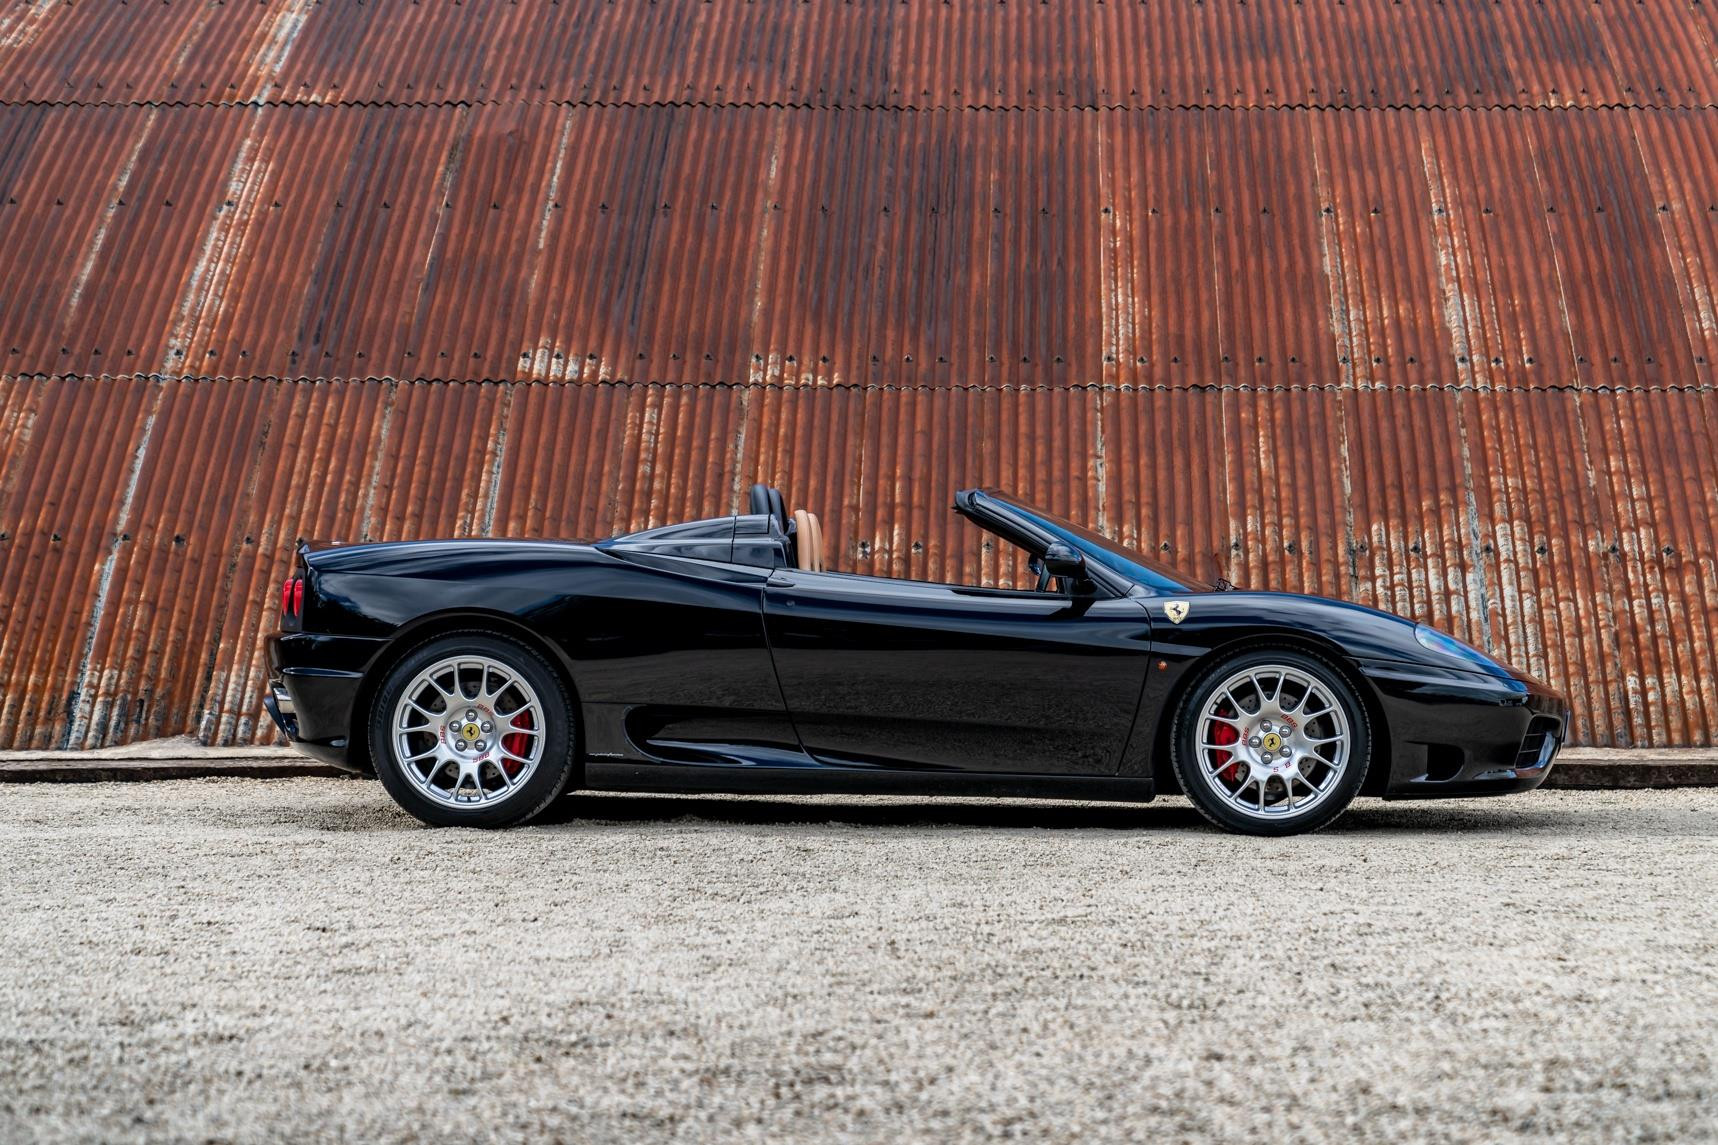 Chi tiết siêu xe Ferrari 360 Spider của David Beckham - 8